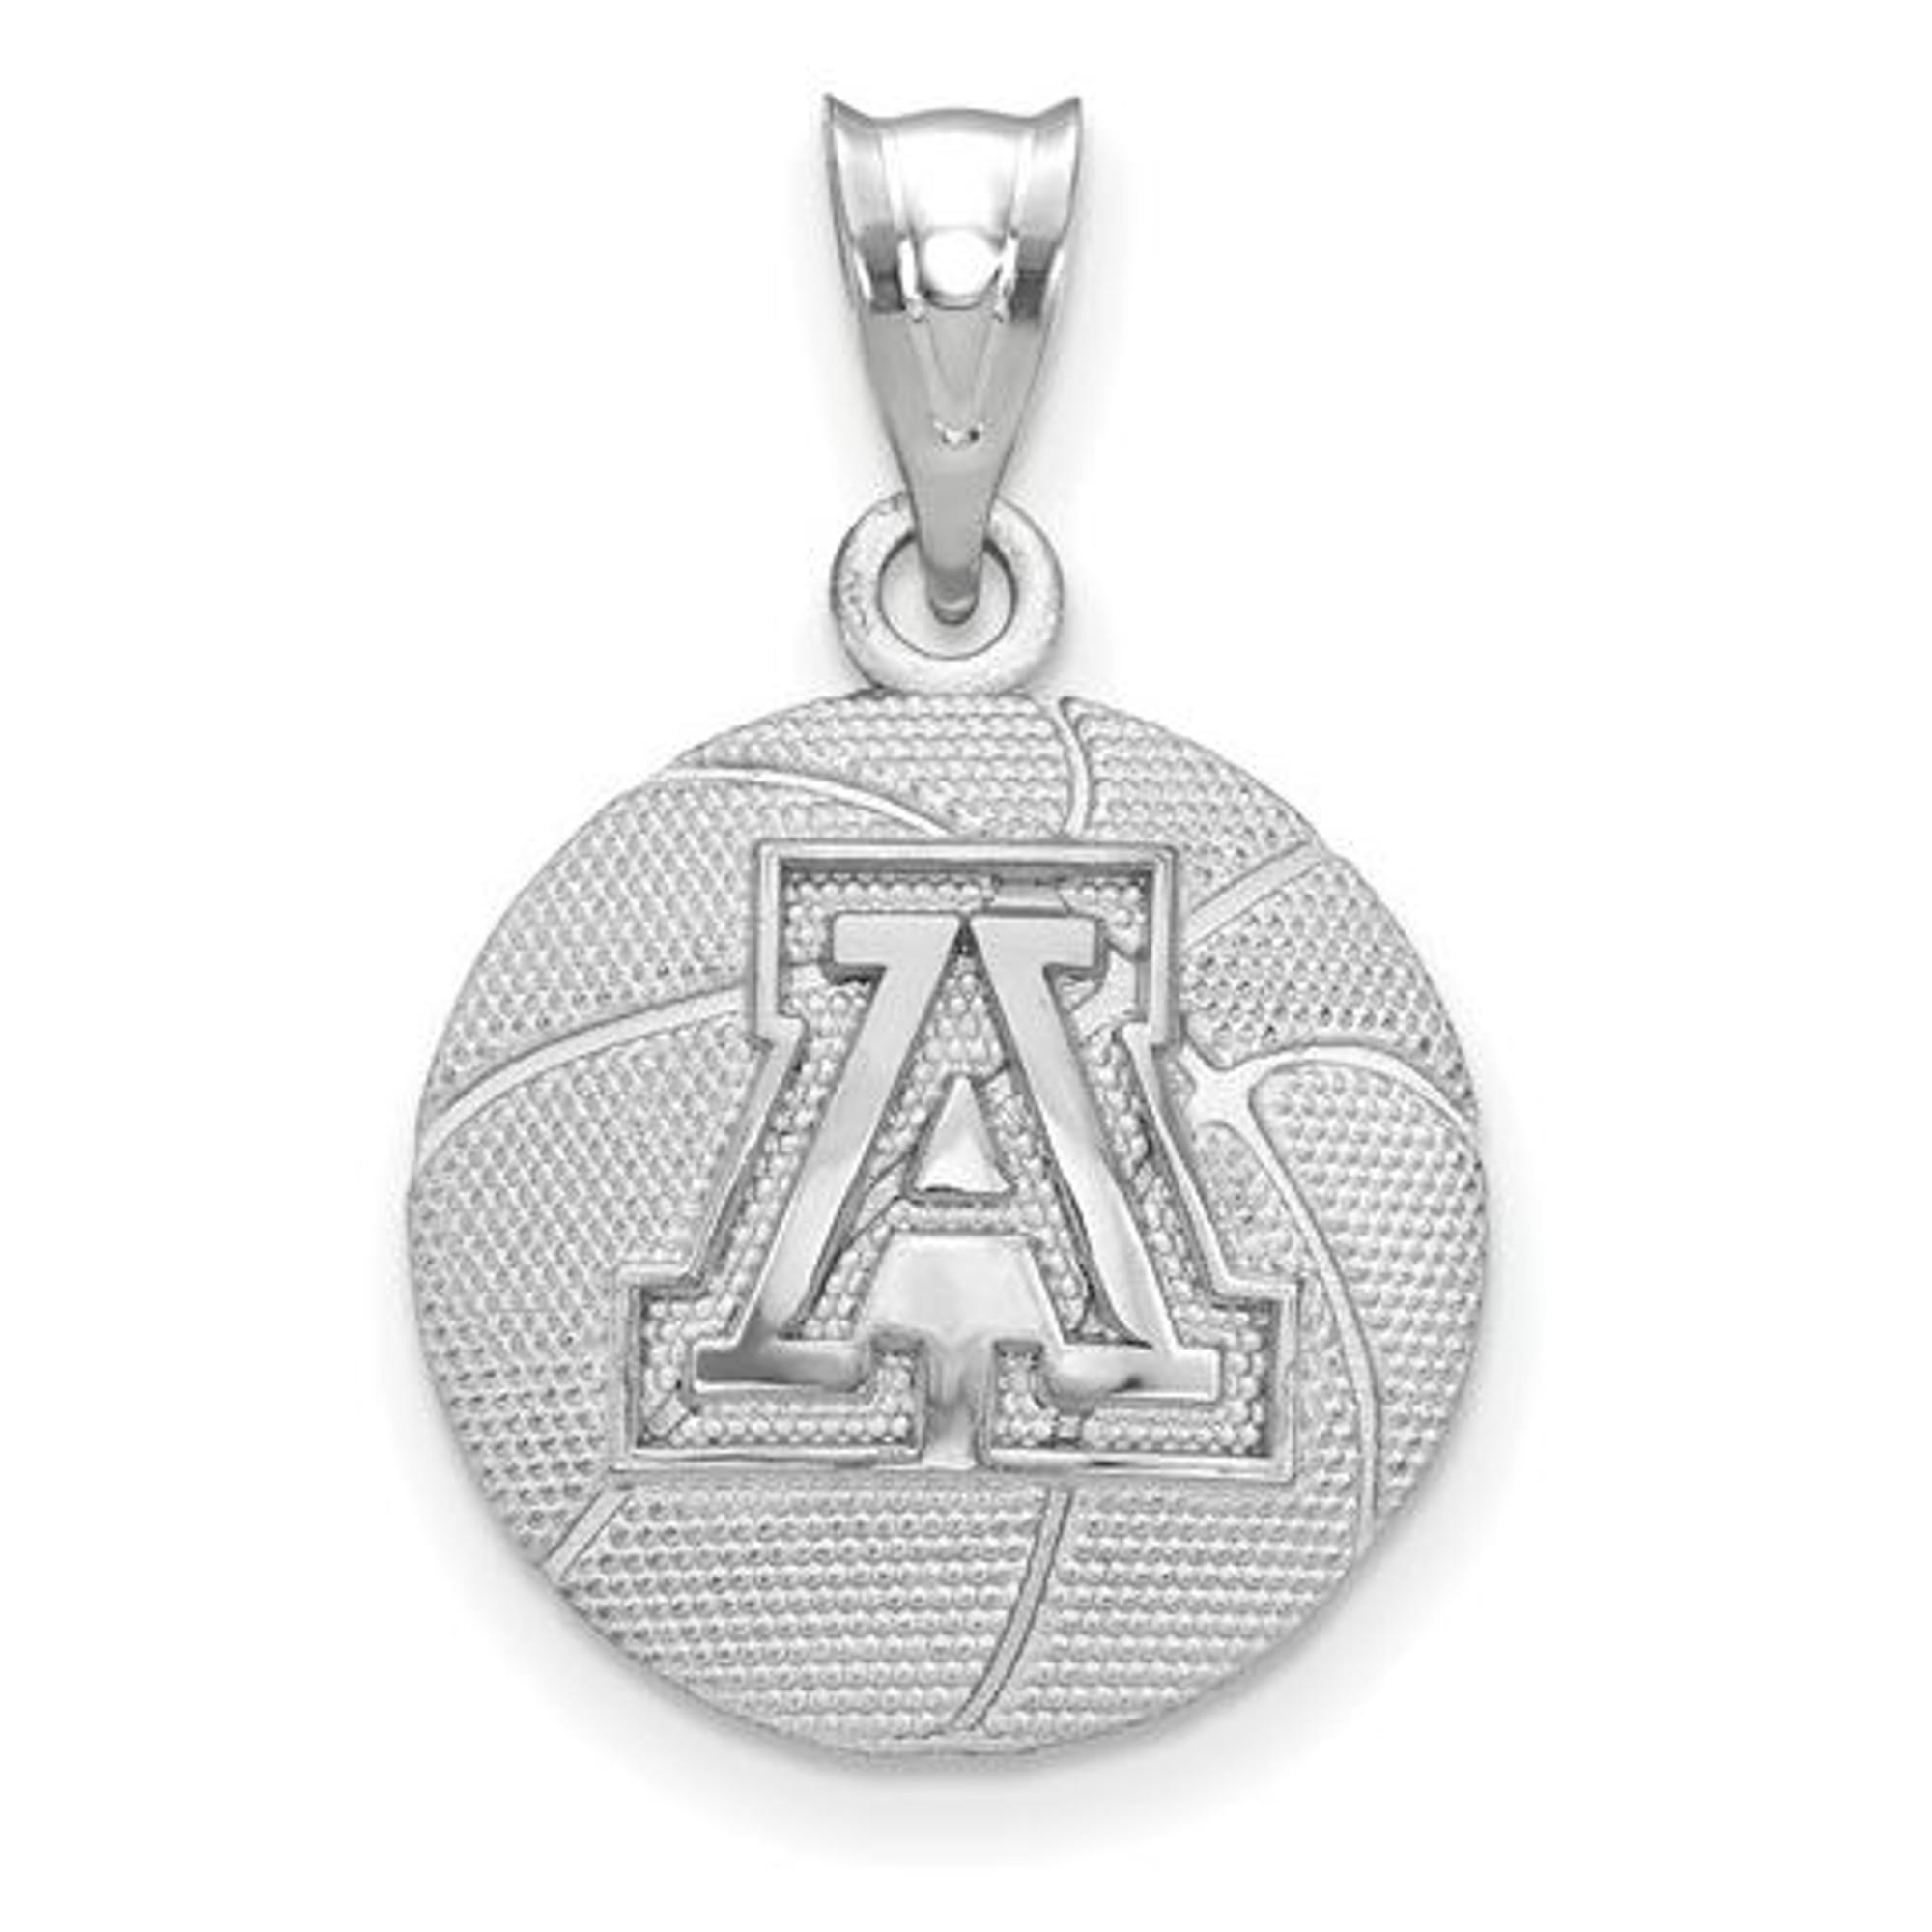 Gold-Plated 925 Silver University of Cincinnati Medium Crest Pendant by LogoArt